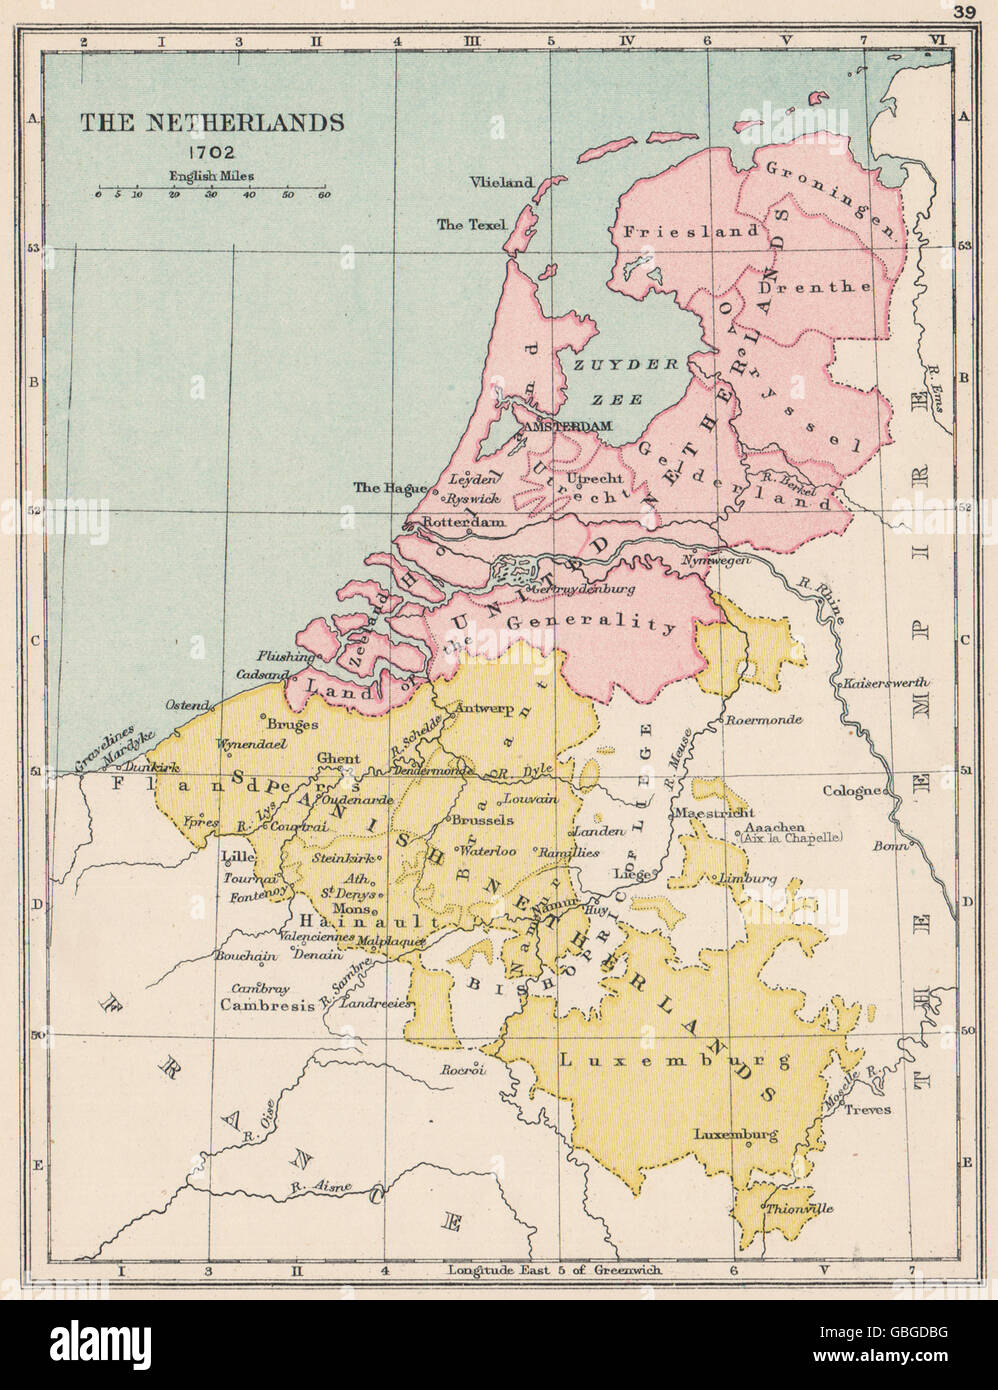 1702: Países Bajos Países Bajos unidos. Los Países Bajos españoles